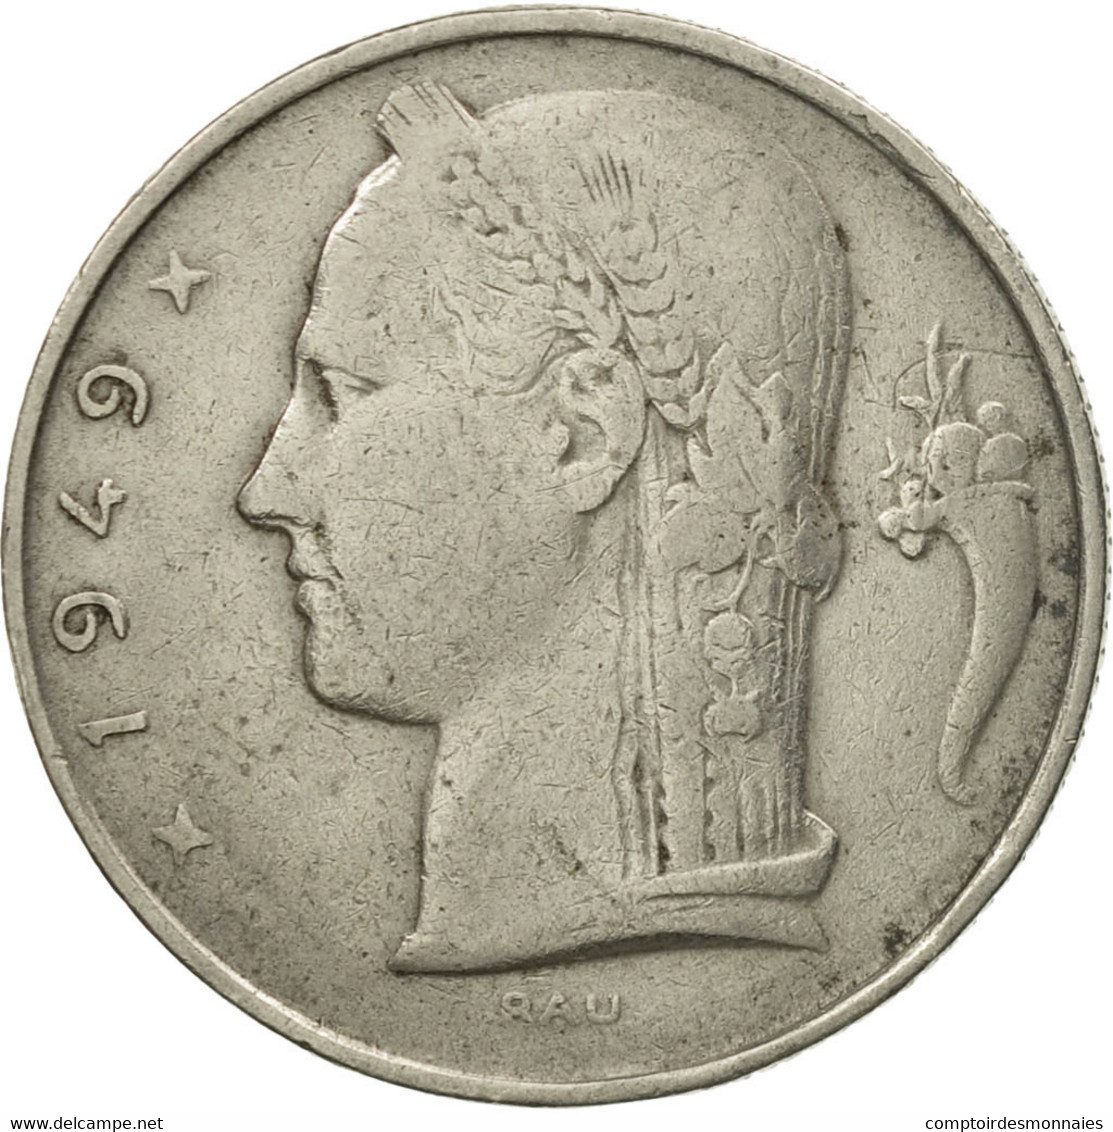 Monnaie, Belgique, 5 Francs, 5 Frank, 1949, TB, Copper-nickel, KM:135.1 - 5 Francs